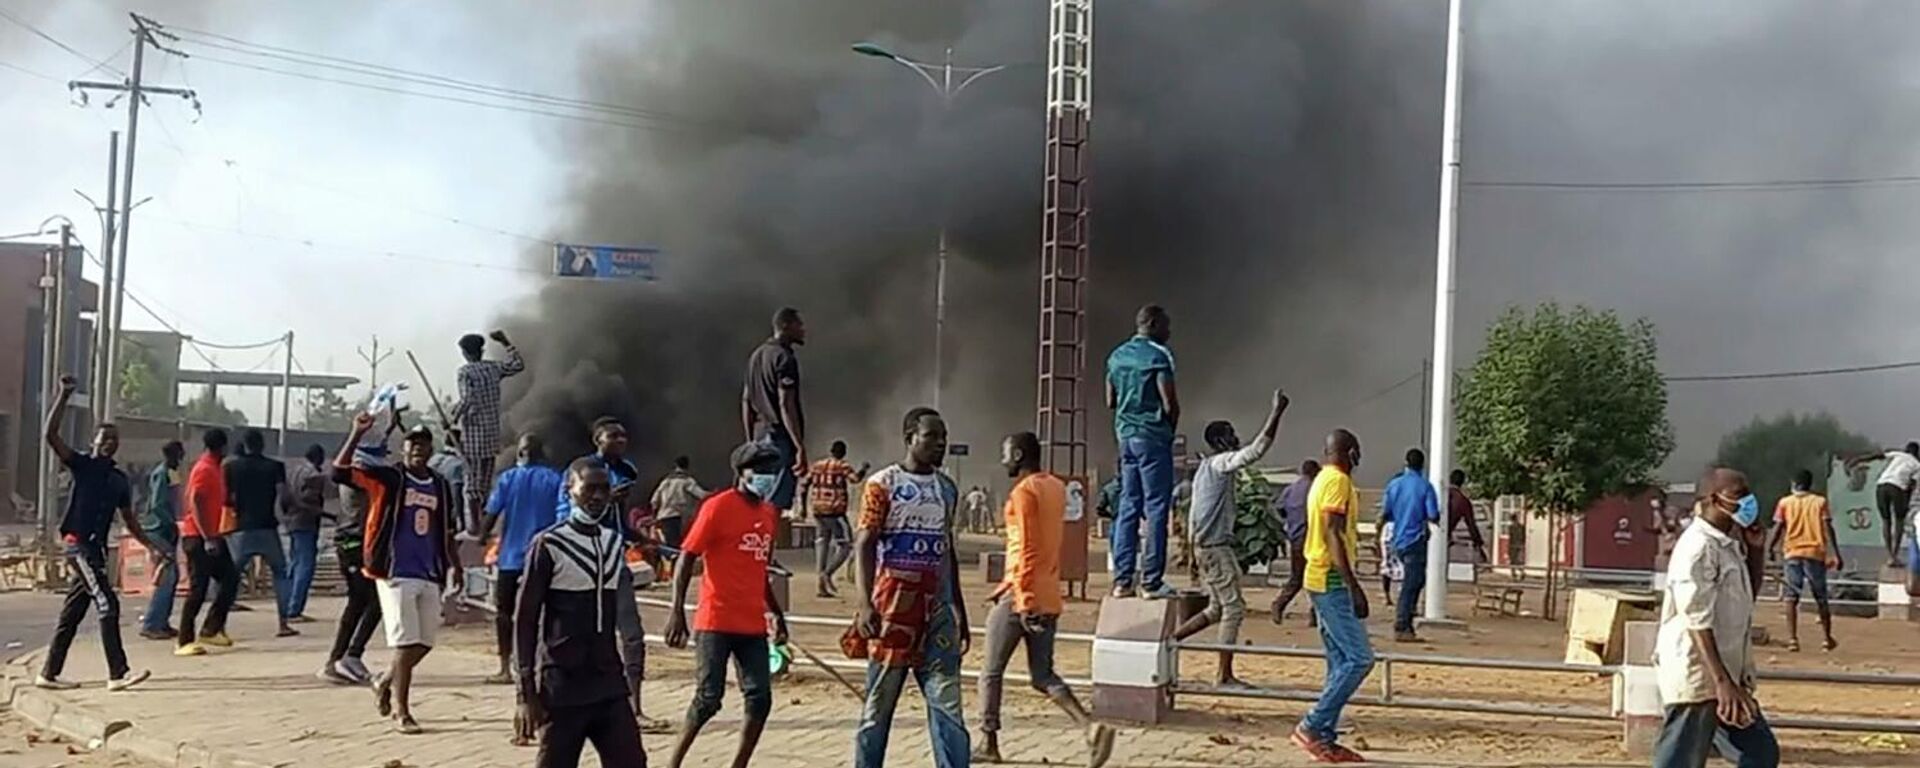 Anti-government demonstrators set a barricade on fire during clashes in N'Djamena, Chad - Sputnik International, 1920, 21.10.2022